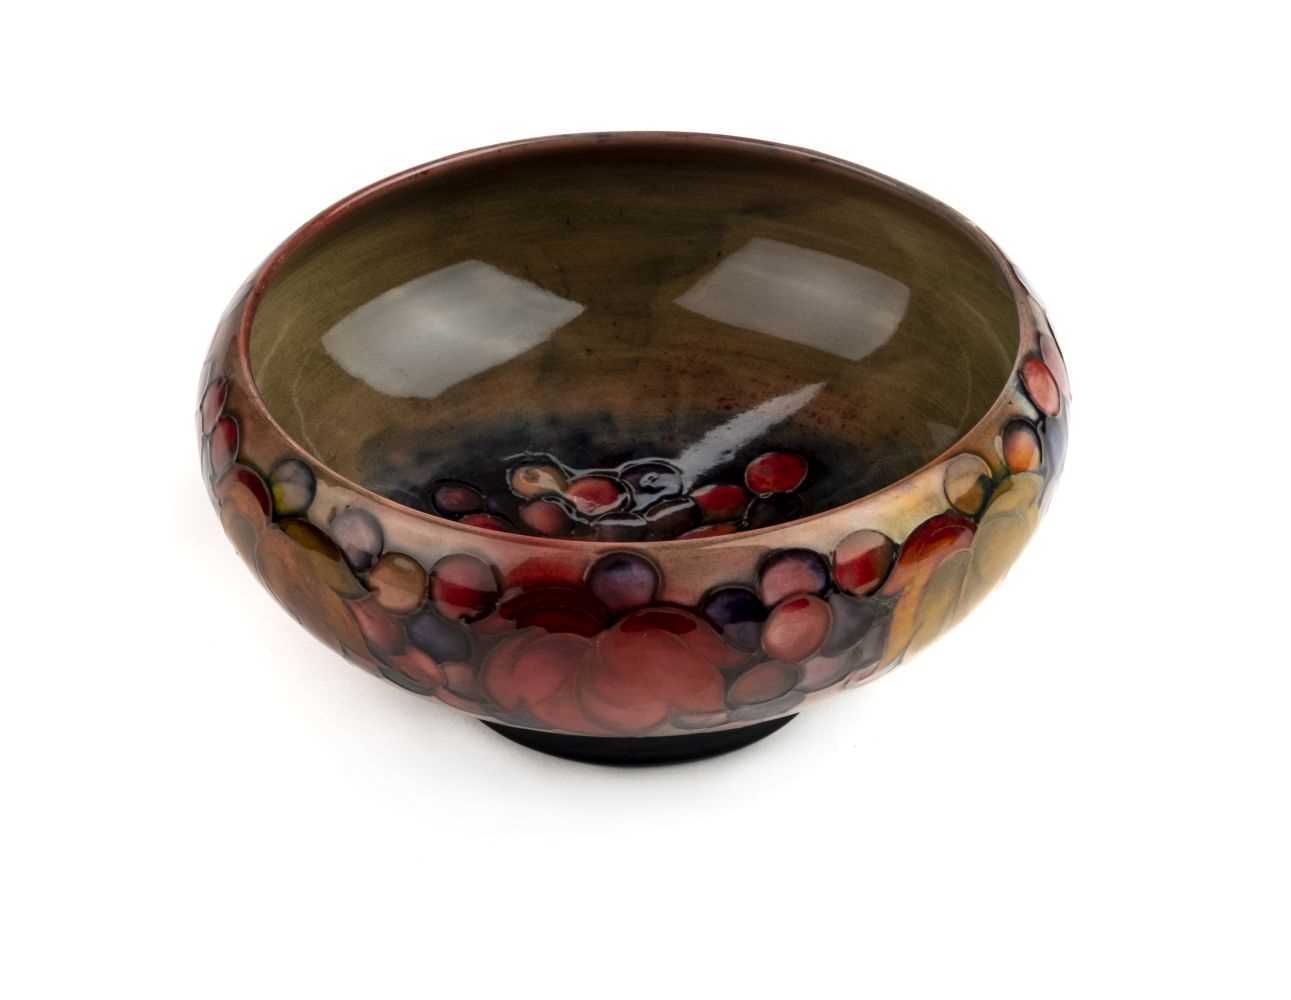 Lot 9 - Moorcroft. A Moorcroft pottery 'Grape and Leaf' pattern bowl